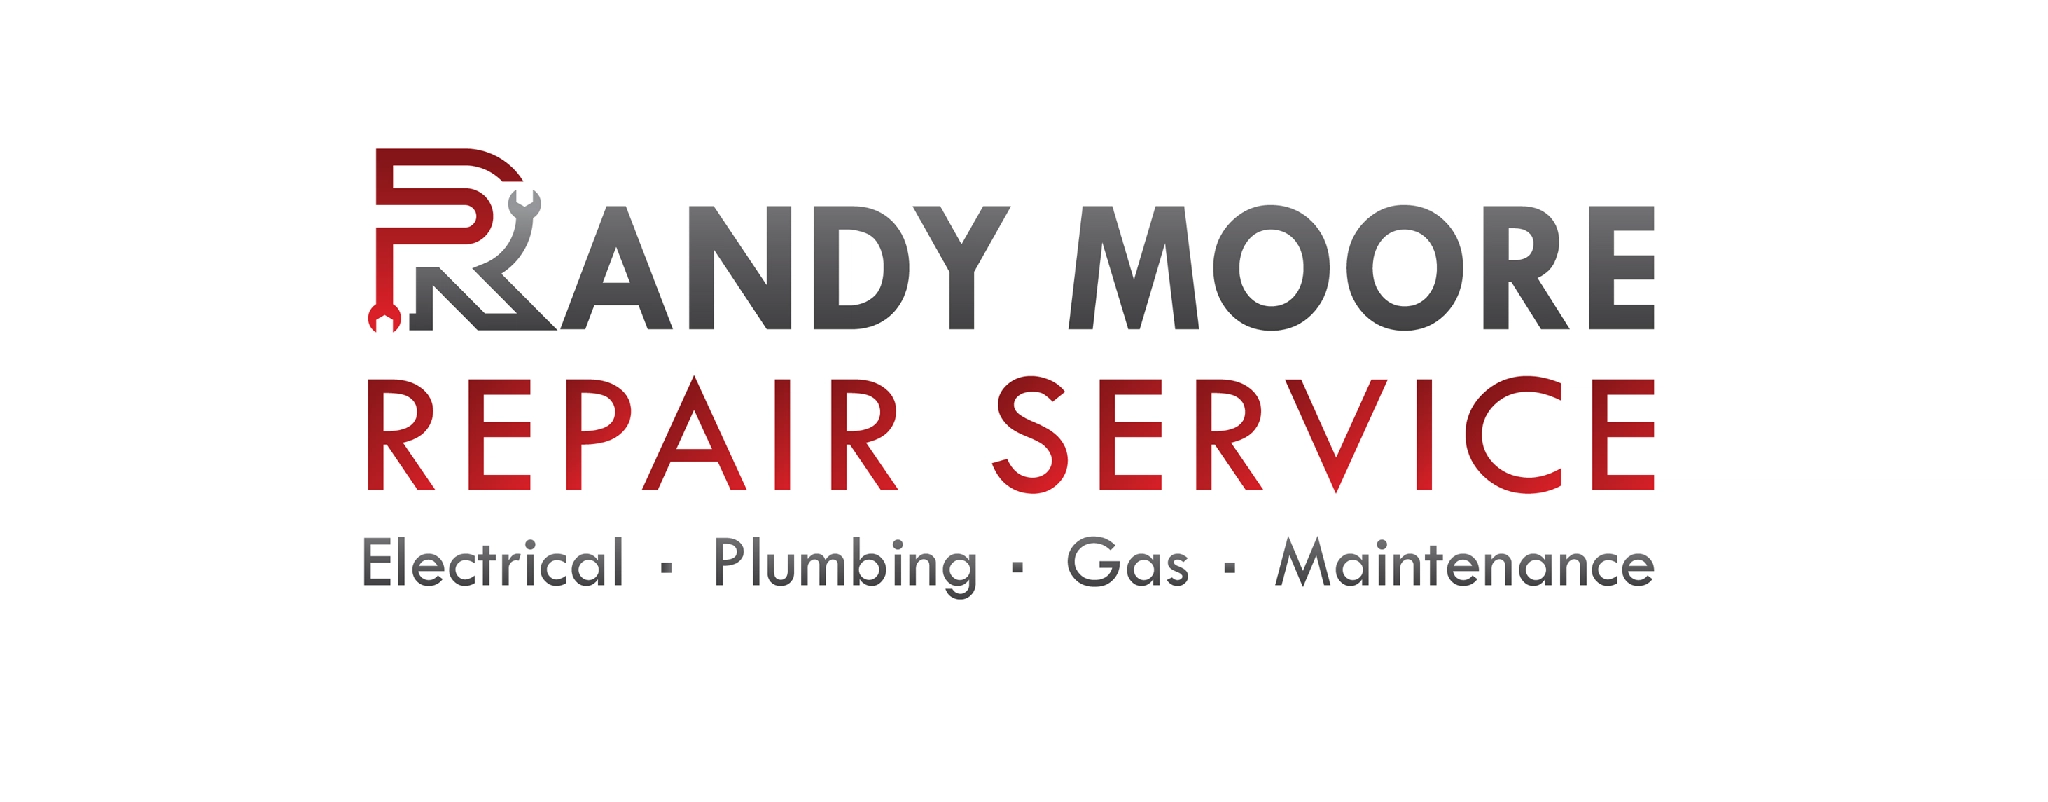 Randy Moore Repair Services Logo